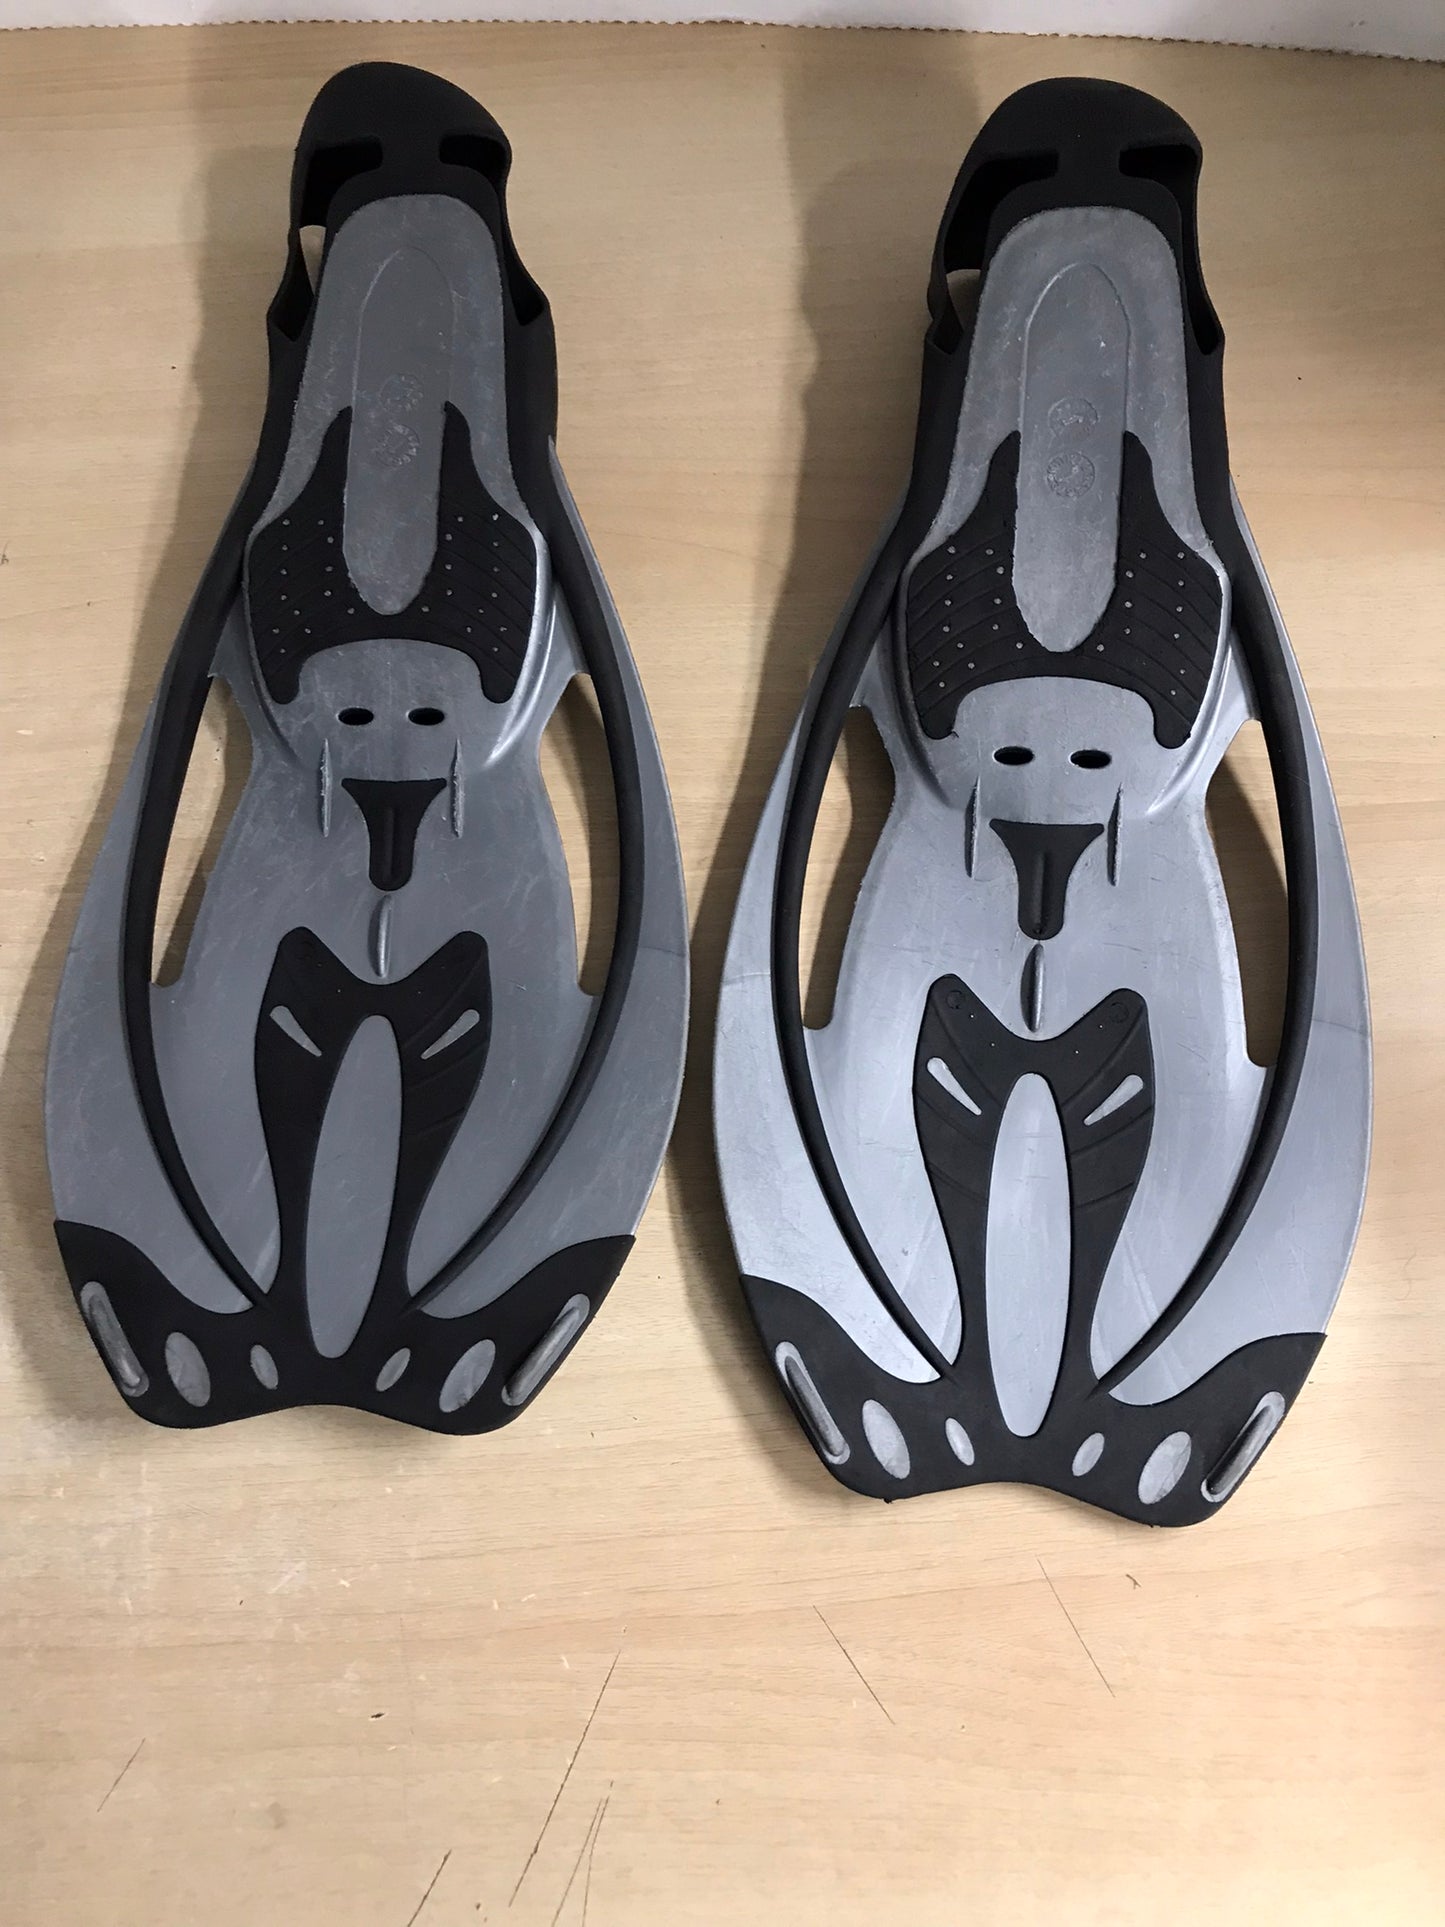 Snorkel Dive Fins Men's Shoe Size 8.5-10.5Body Glove Black Grey Some Scratches on Back